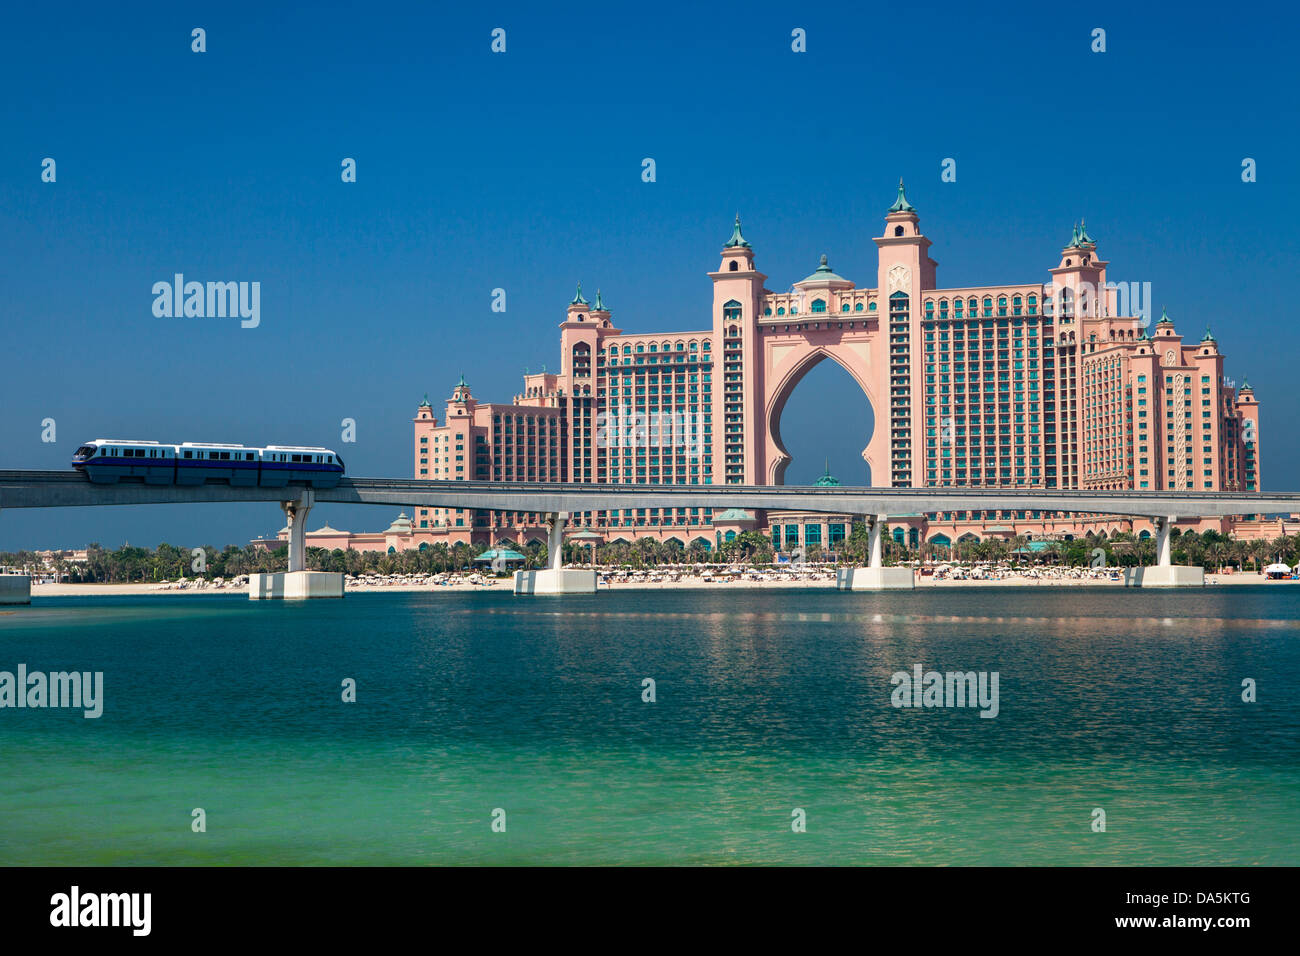 United Arab Emirates, UAE, Dubai, City, Jumeirah, Palm Jumeirah, Atlantis, Building, arch, Atlantis, beach, famous, hotel, palm, Stock Photo